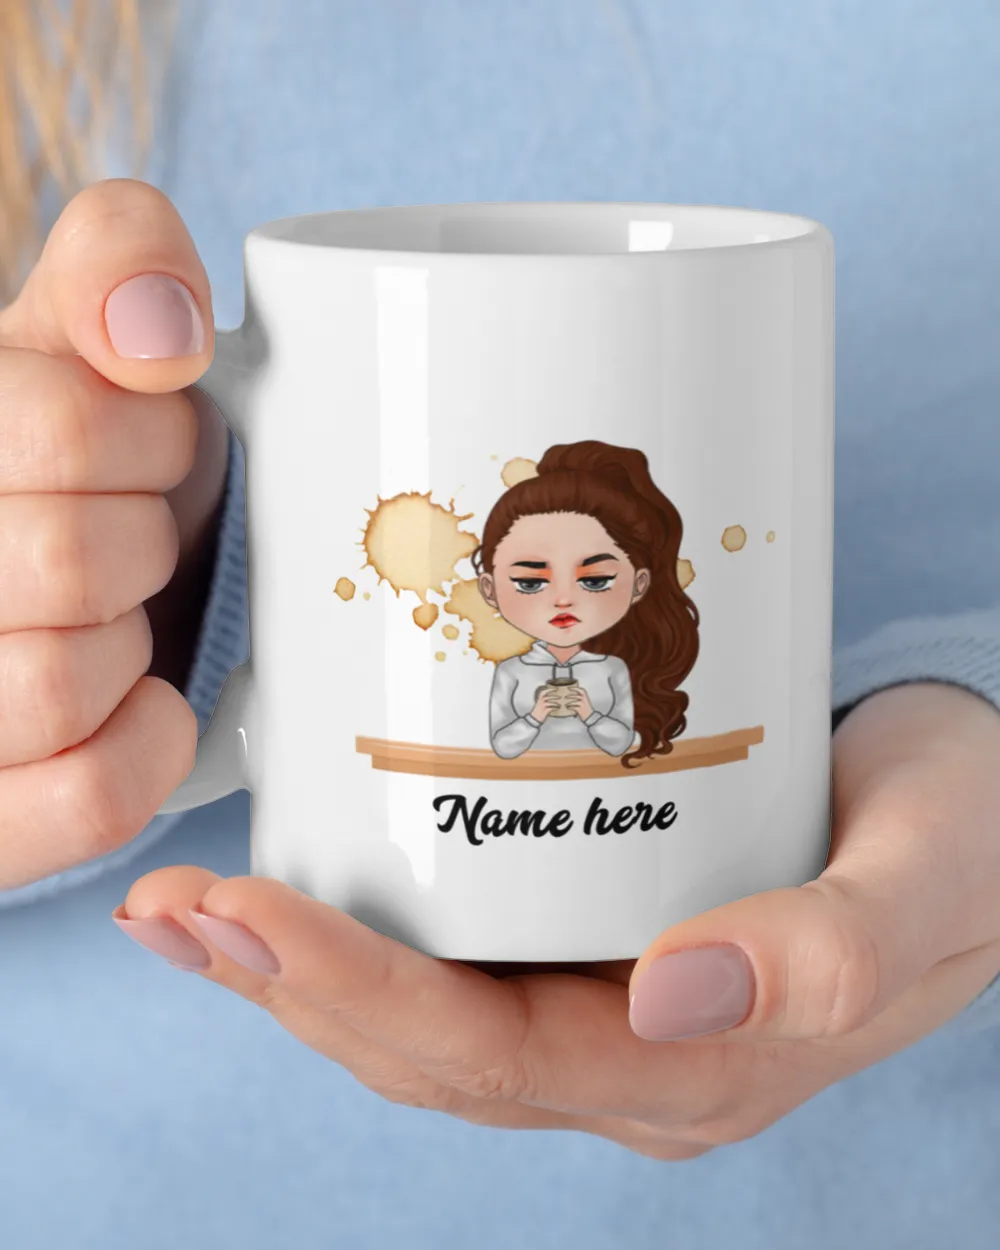 Grumpy Girl Coffee Custom Mug August Girl With Three Sides Personalized Gift